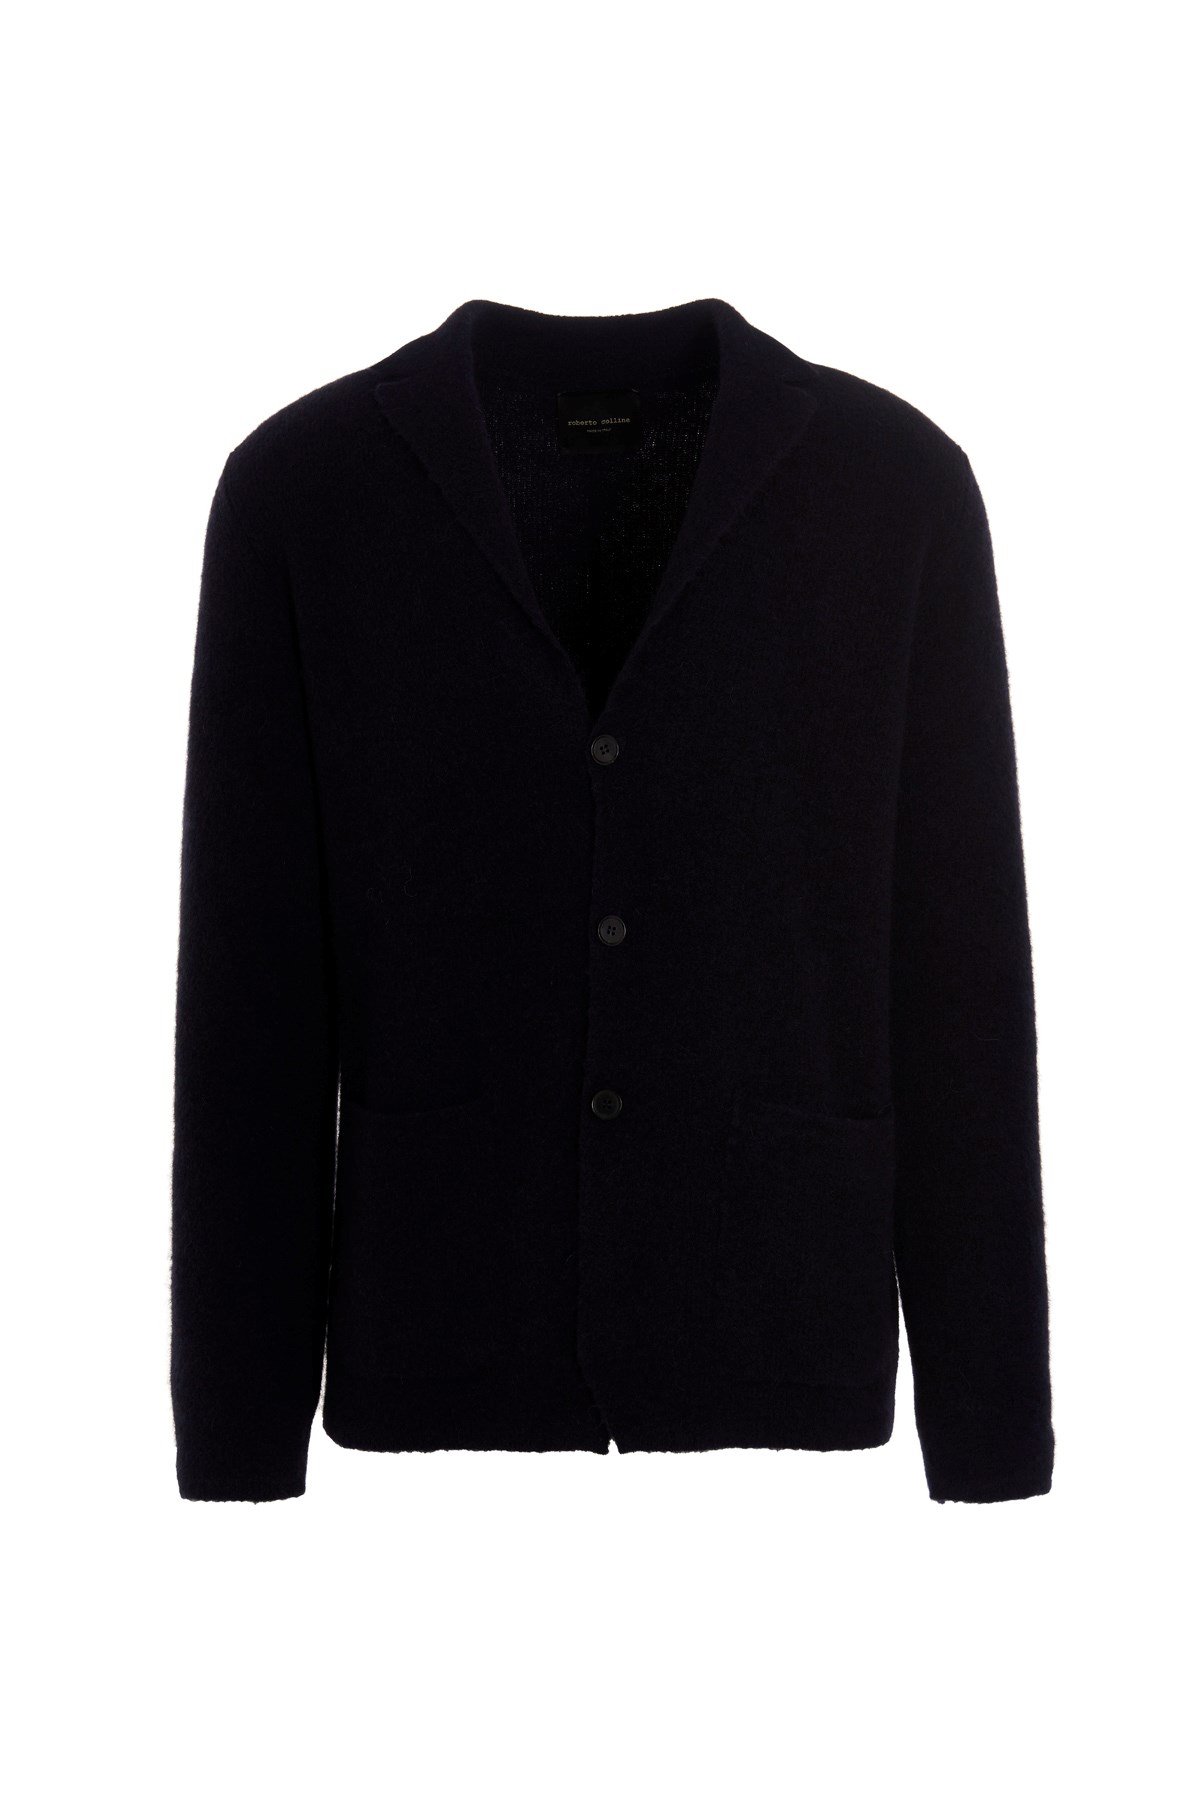 ROBERTO COLLINA Single-Breasted Knit Blazer Jacket